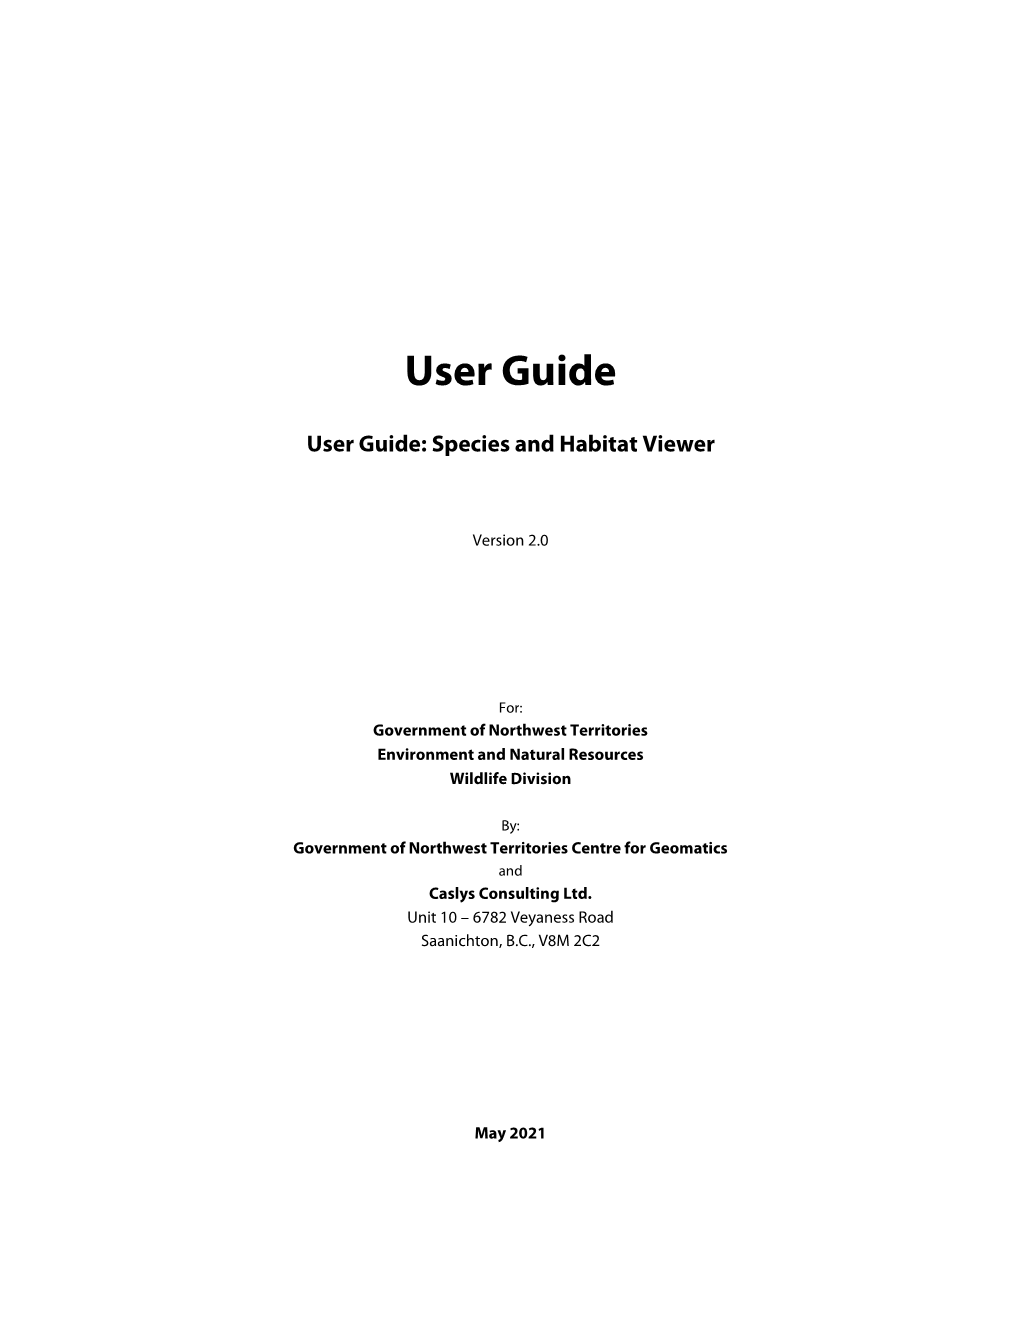 Species and Habitat Viewer User Manual